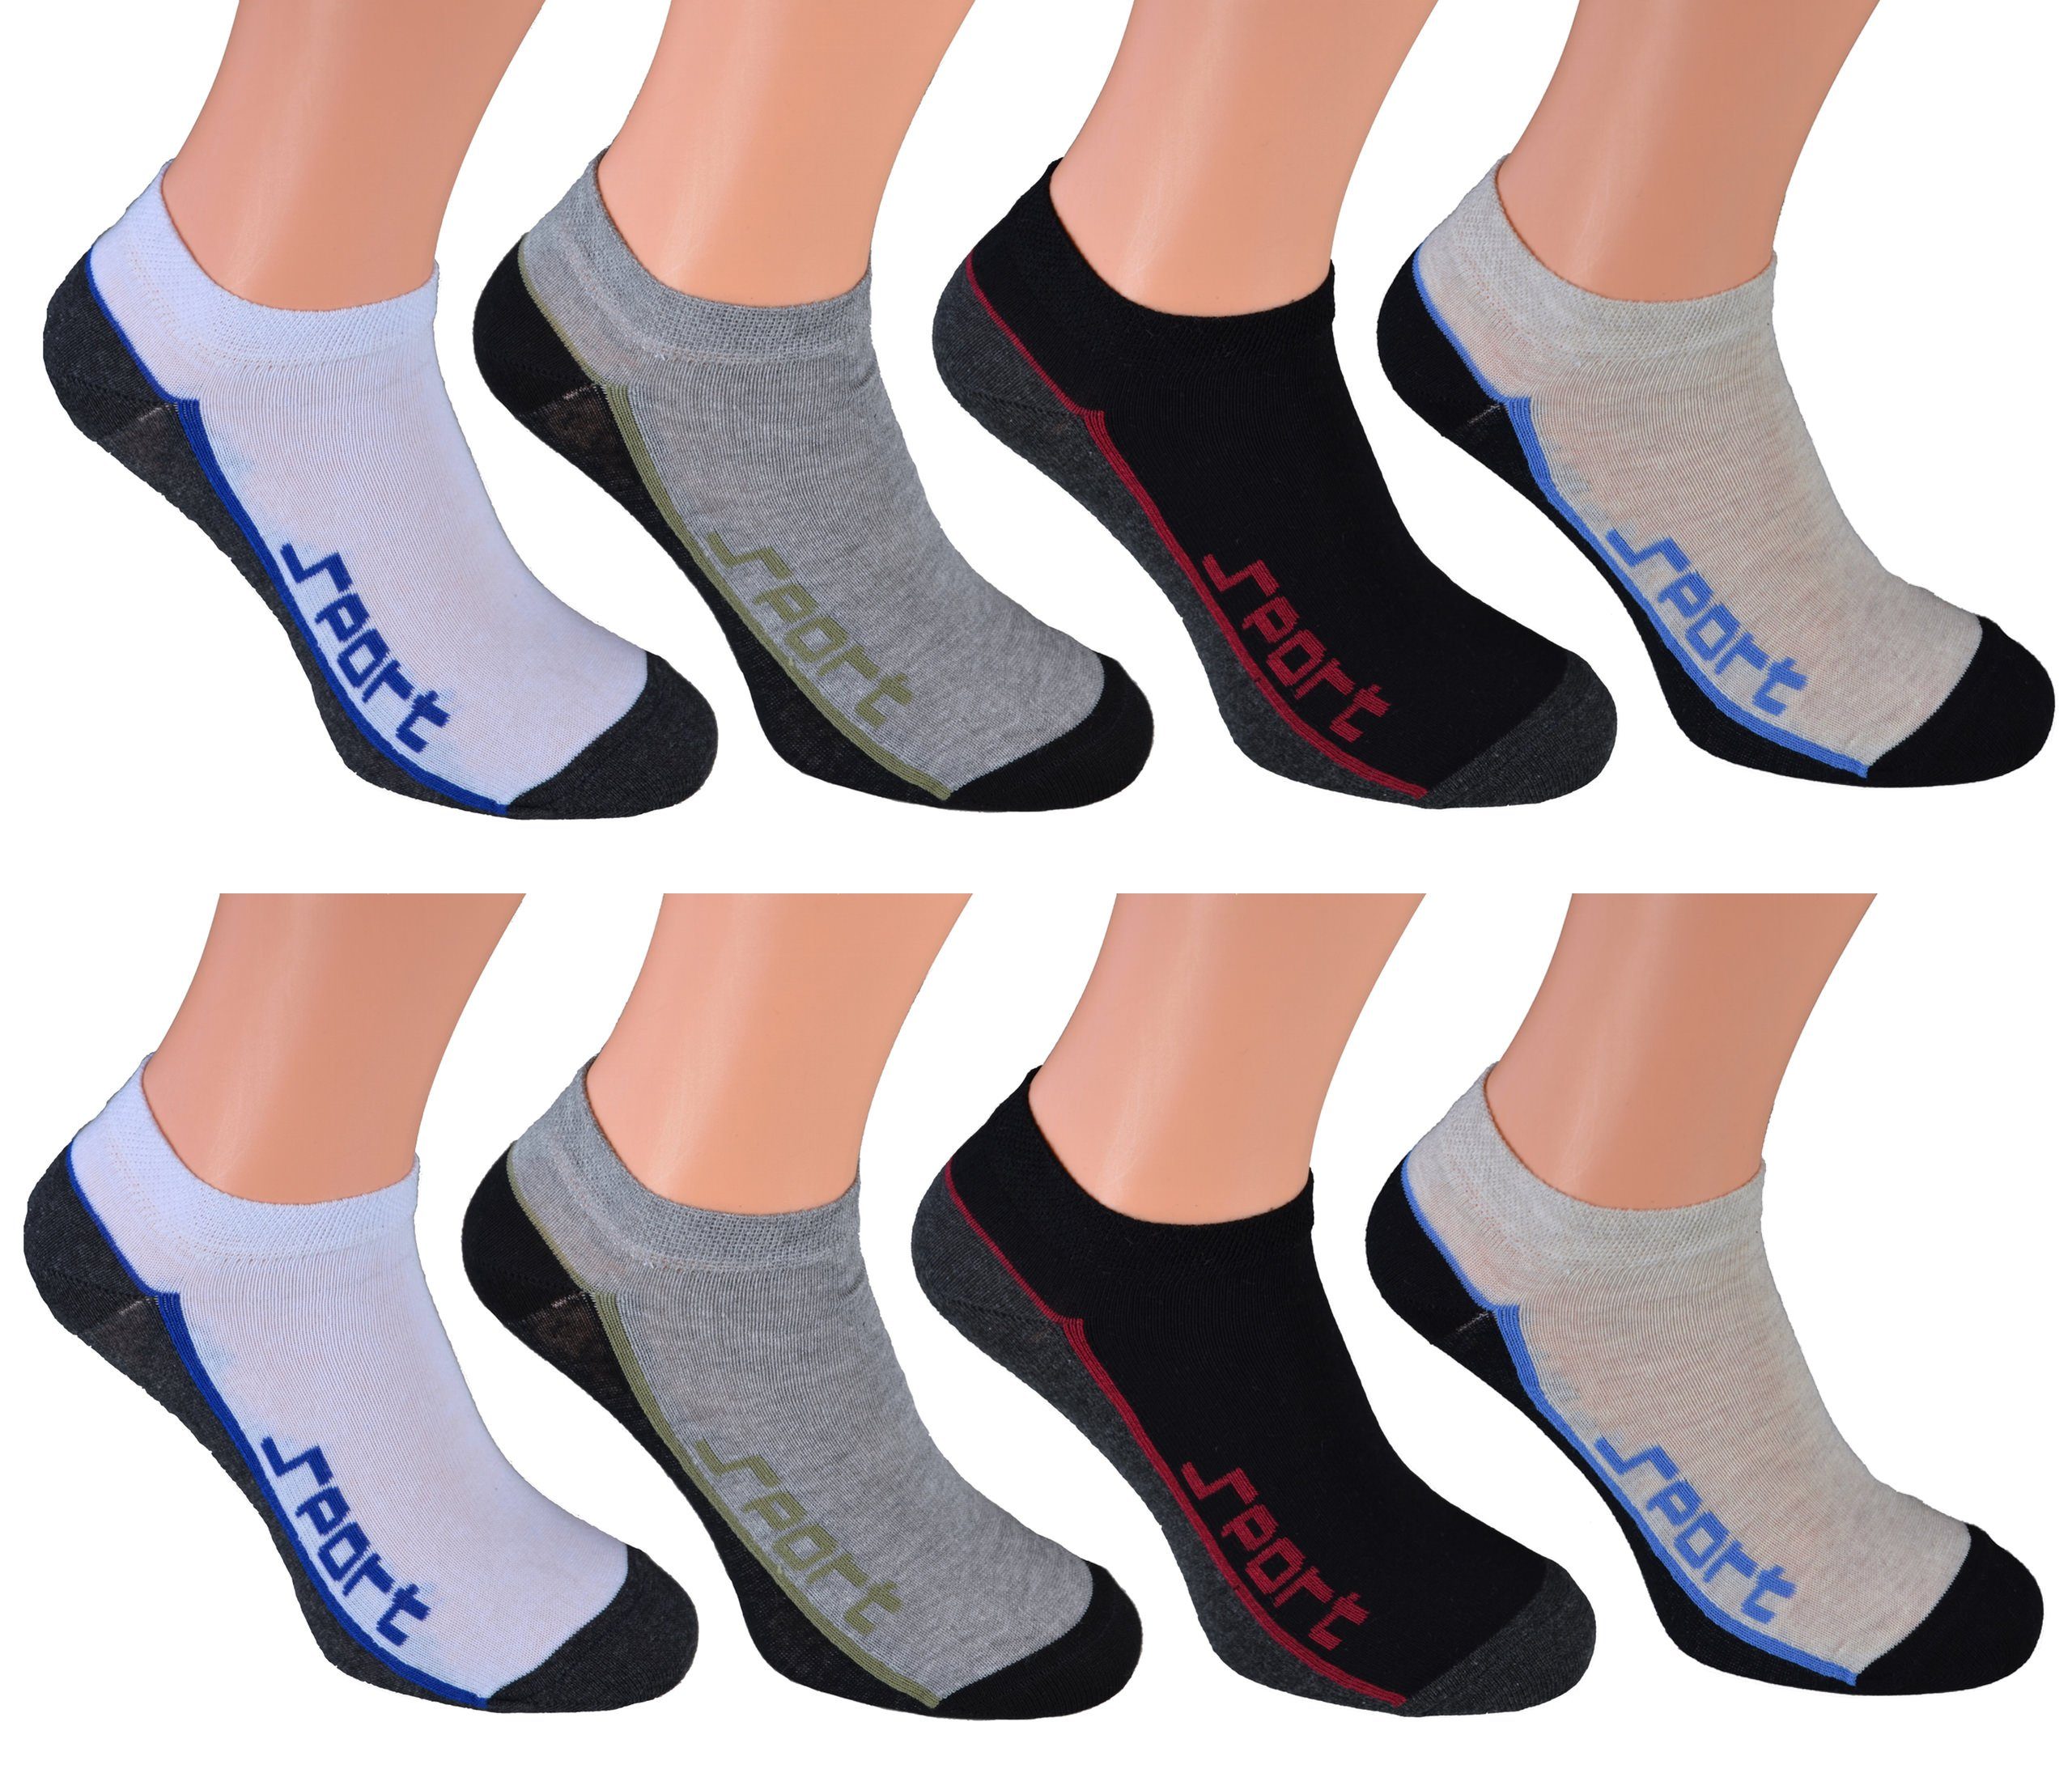 Cocain underwear Sneaker Herren Socken (8-Paar) - Söckchen Baumwolle Paar Sneakersocken 8 für Modelle Füsslinge verschiedene Sport